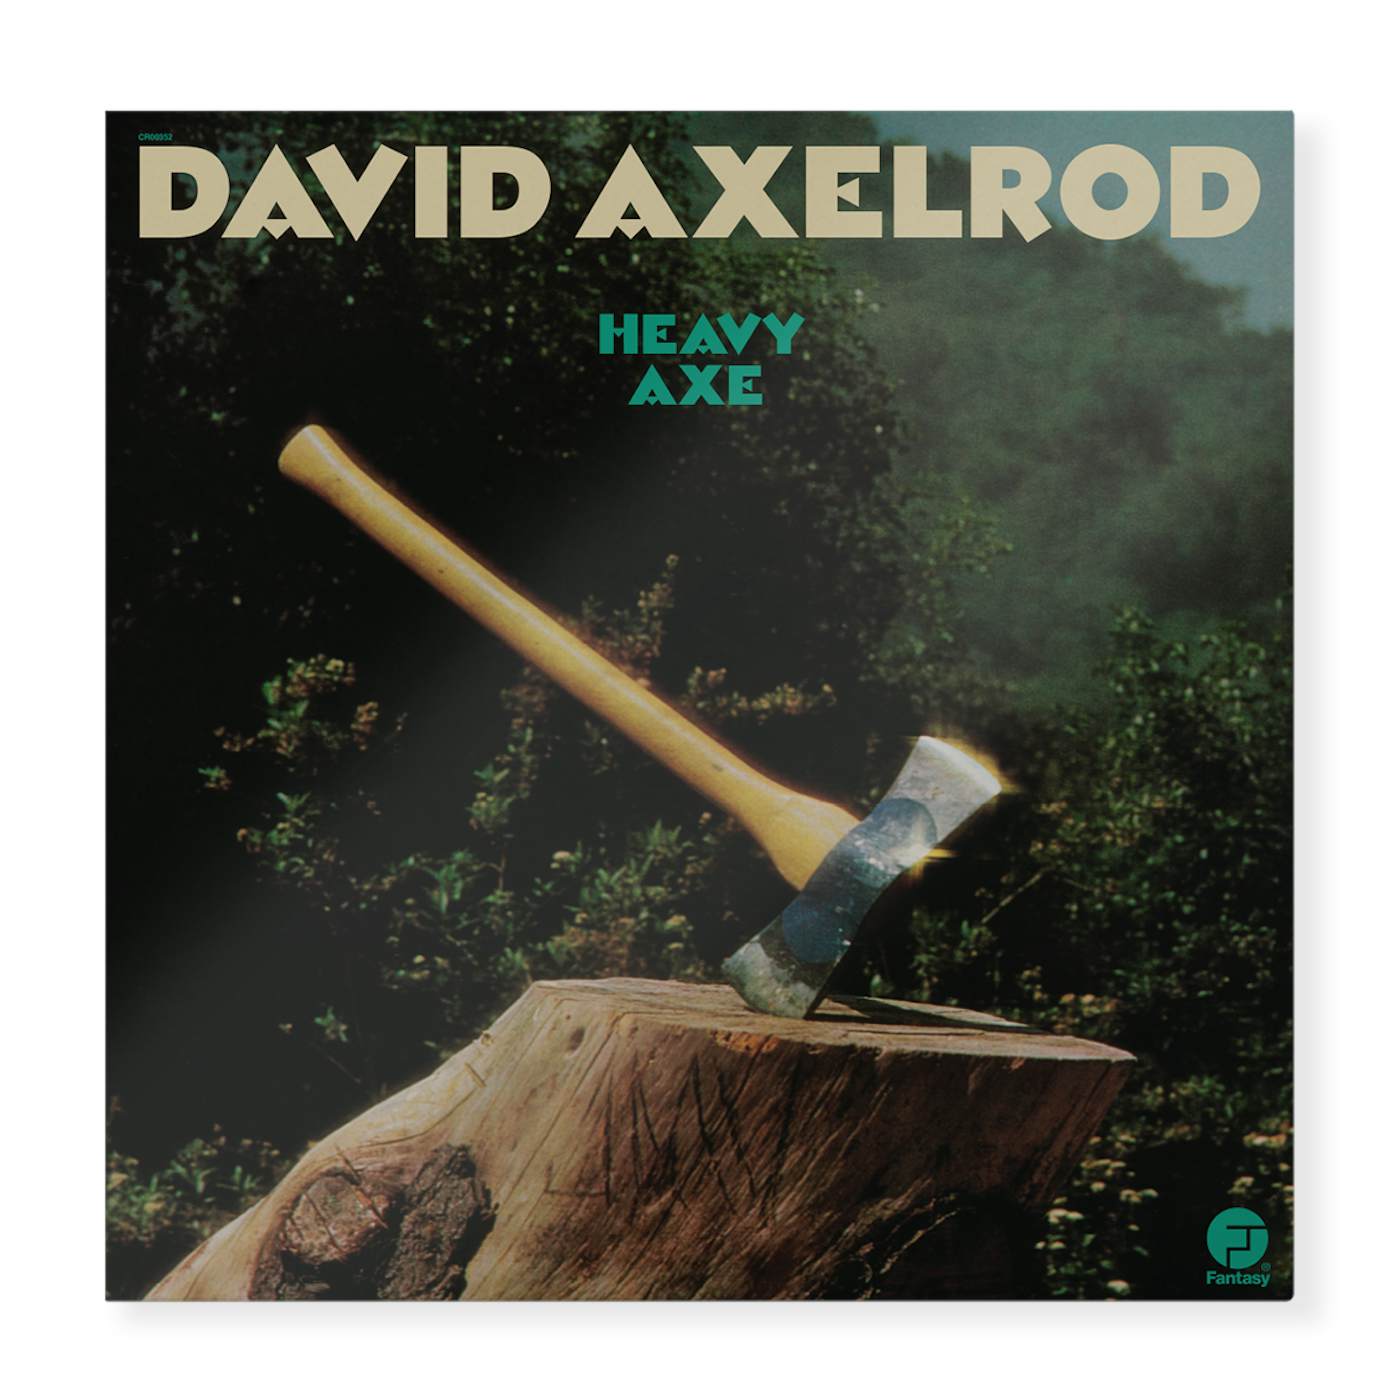 David Axelrod Heavy Axe 180g LP (Vinyl)